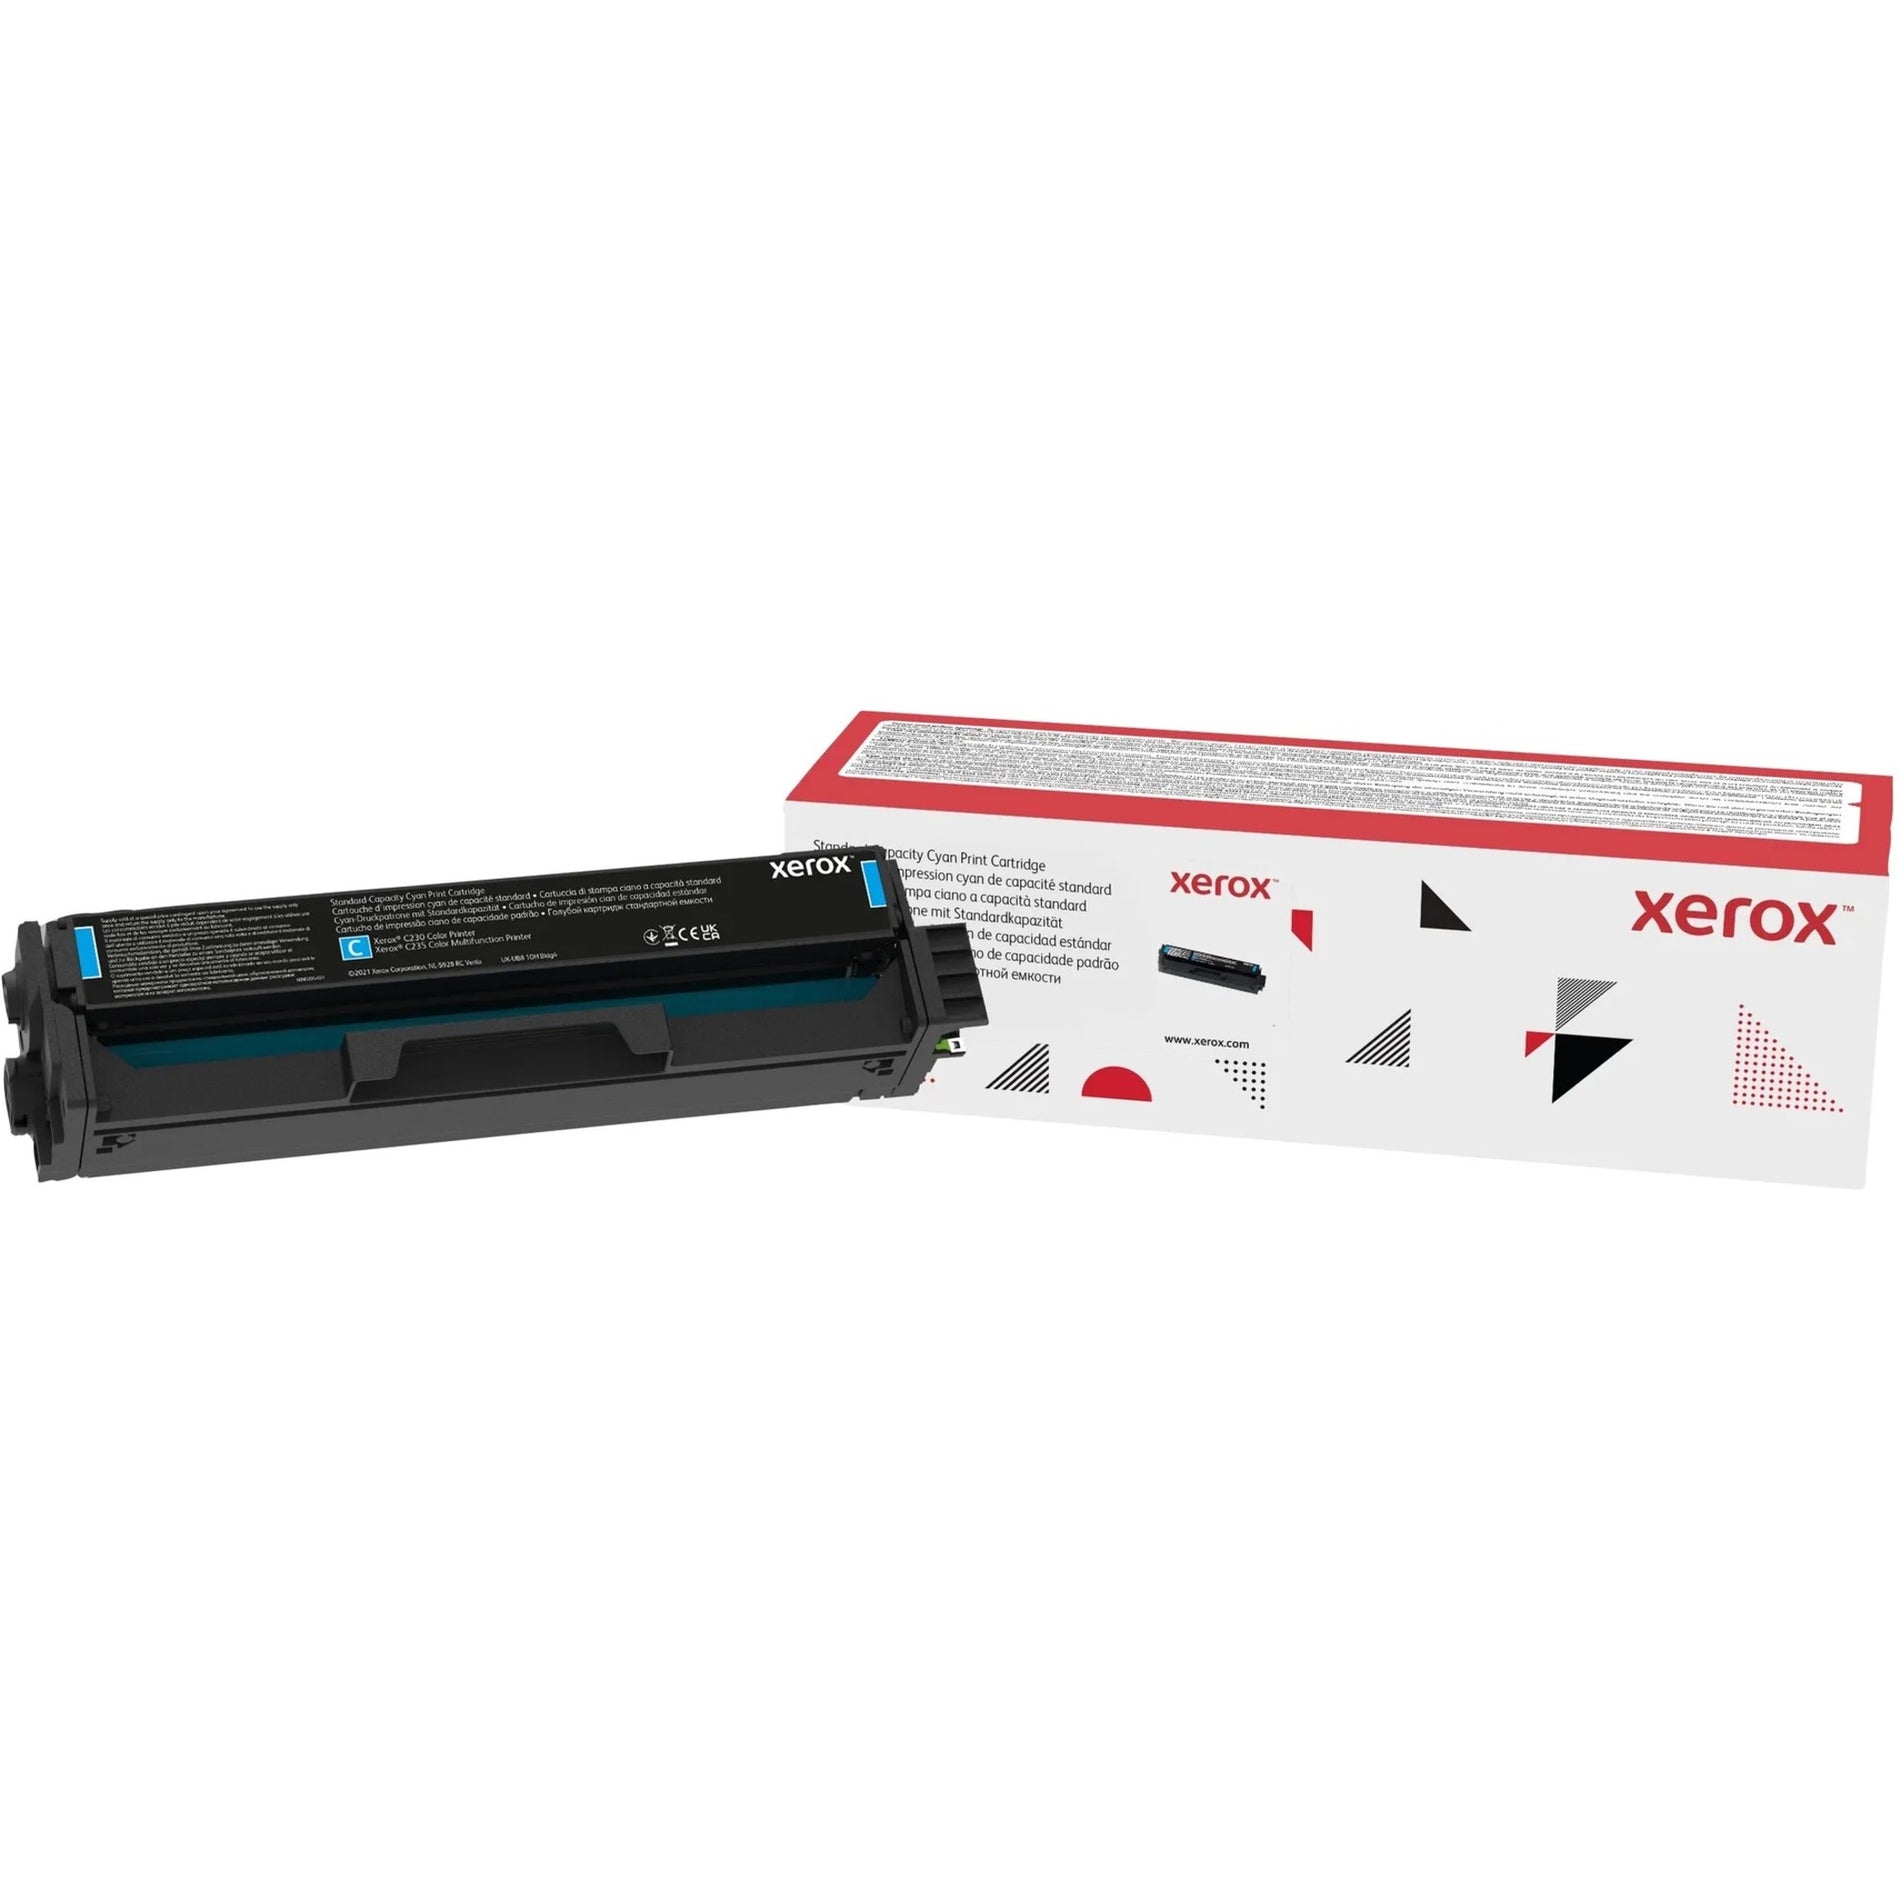 Xerox 006R04384 C230 / C235 Cyan Standard Capacity Toner Cartridge (1,500 pages), Original